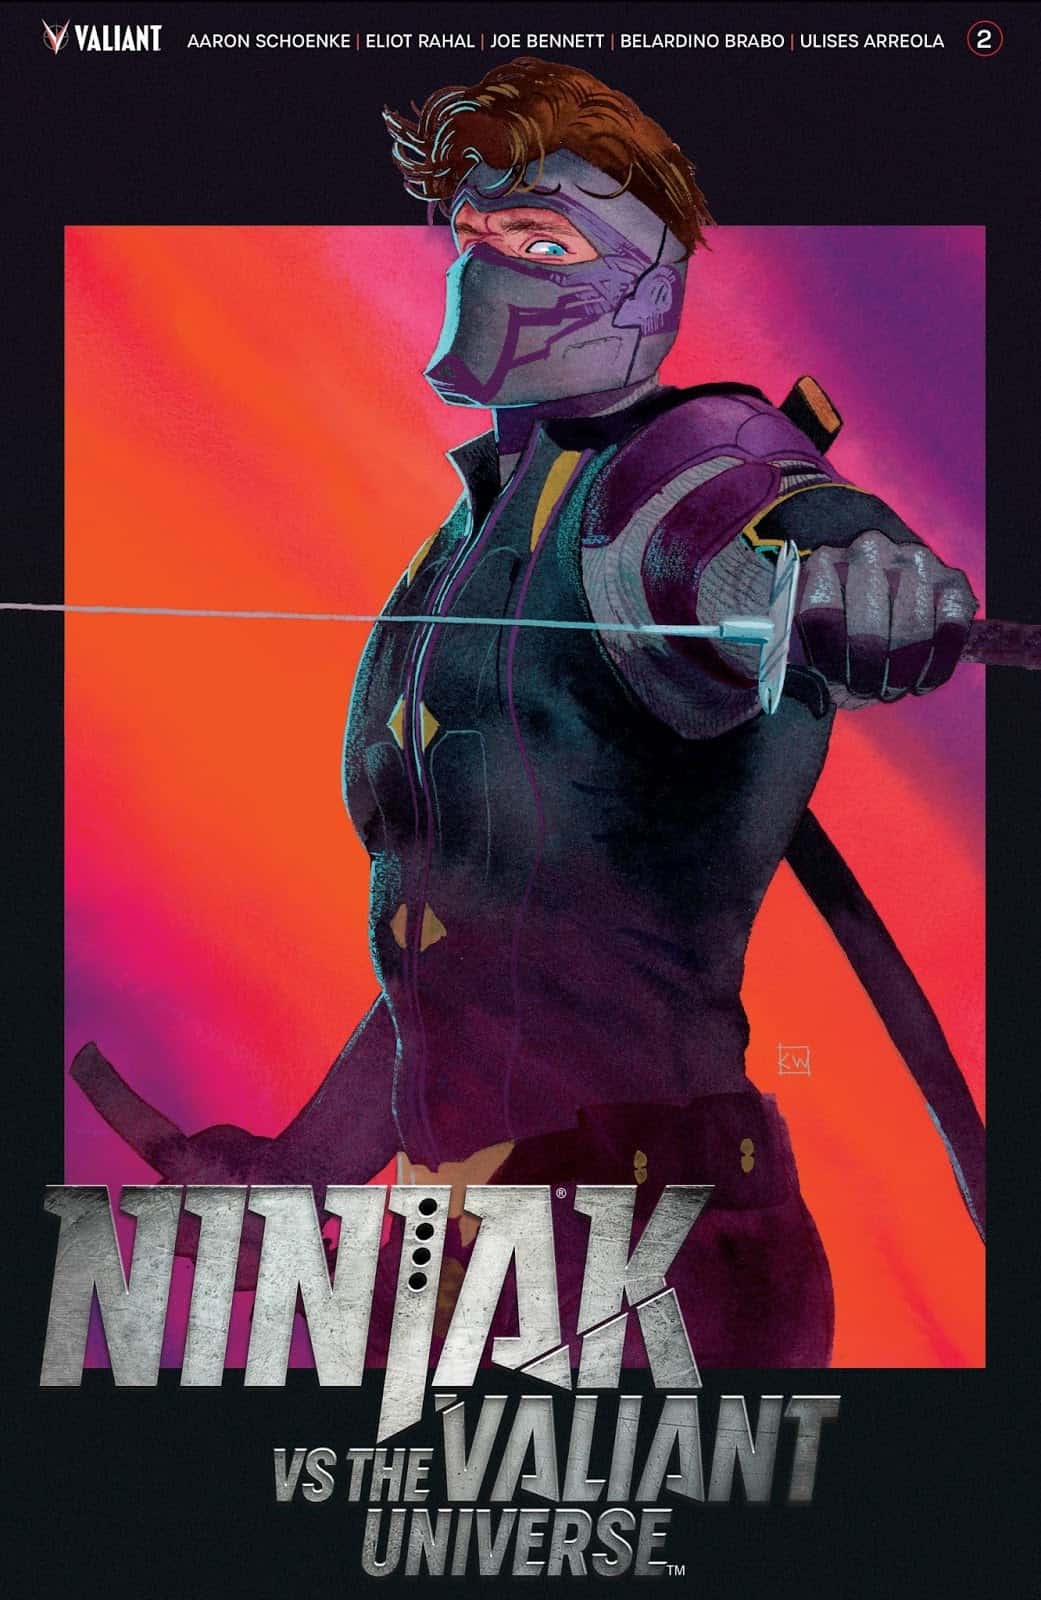 free download mark of the ninja gog